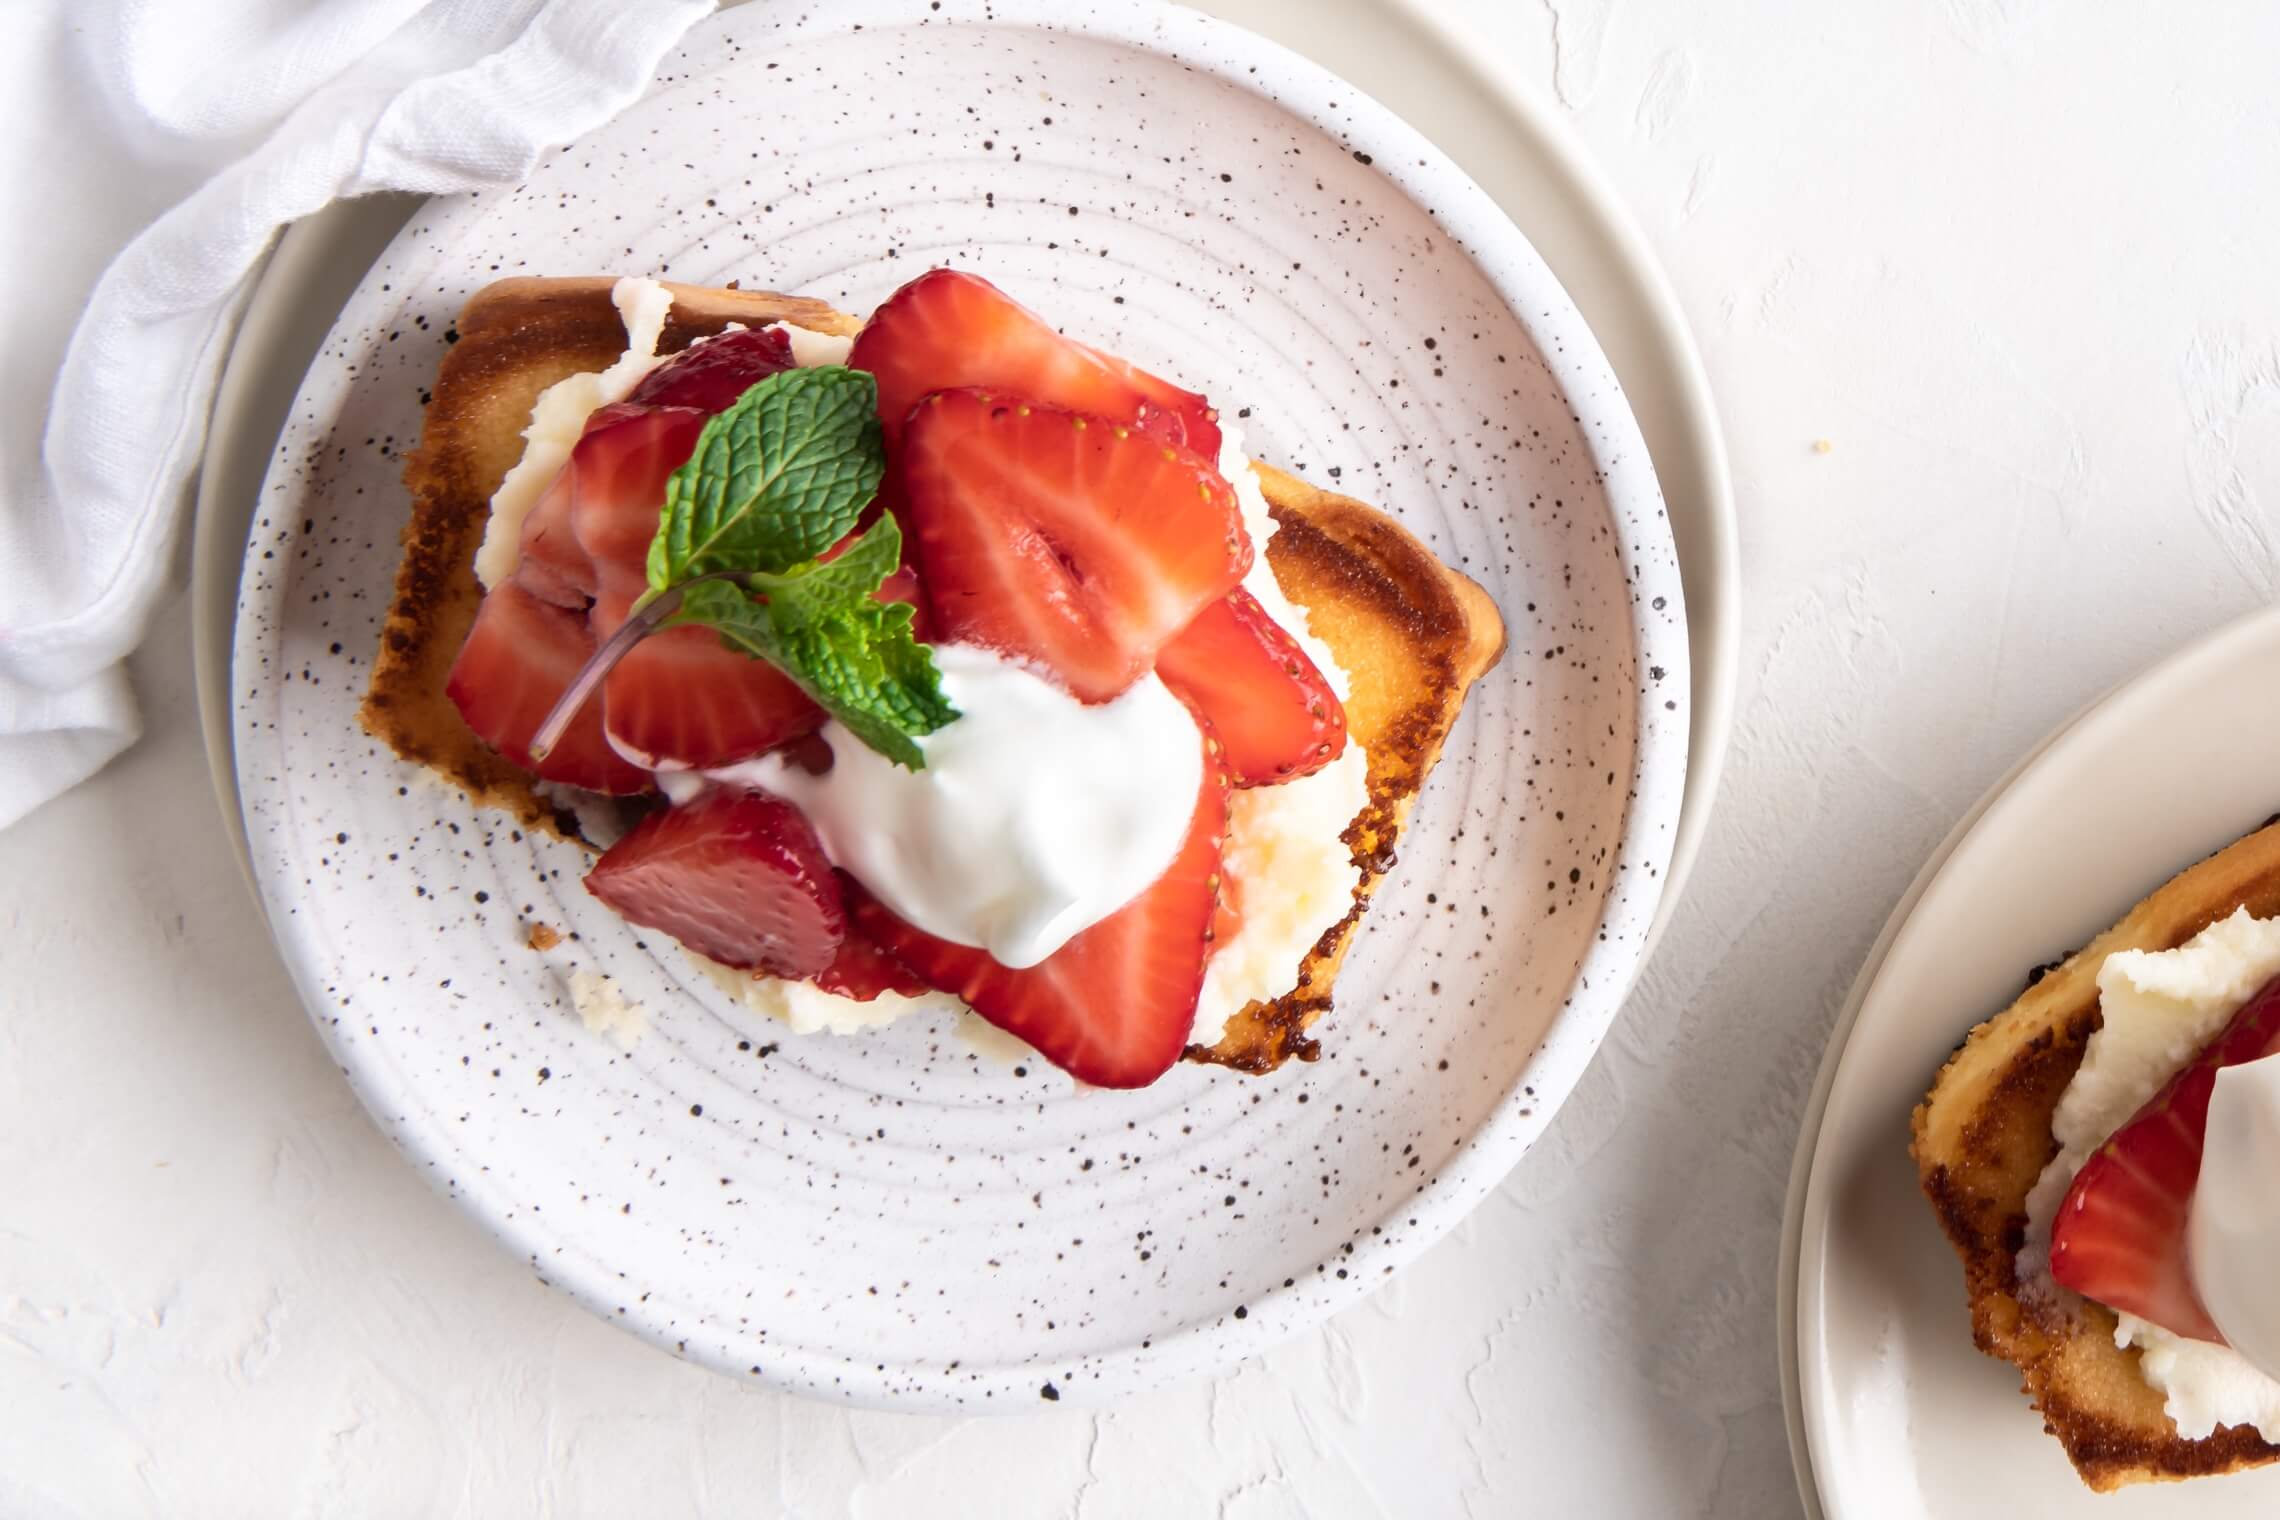 Vanilla Butter Grilled Pound Cake “Tiramisu” with Strawberries